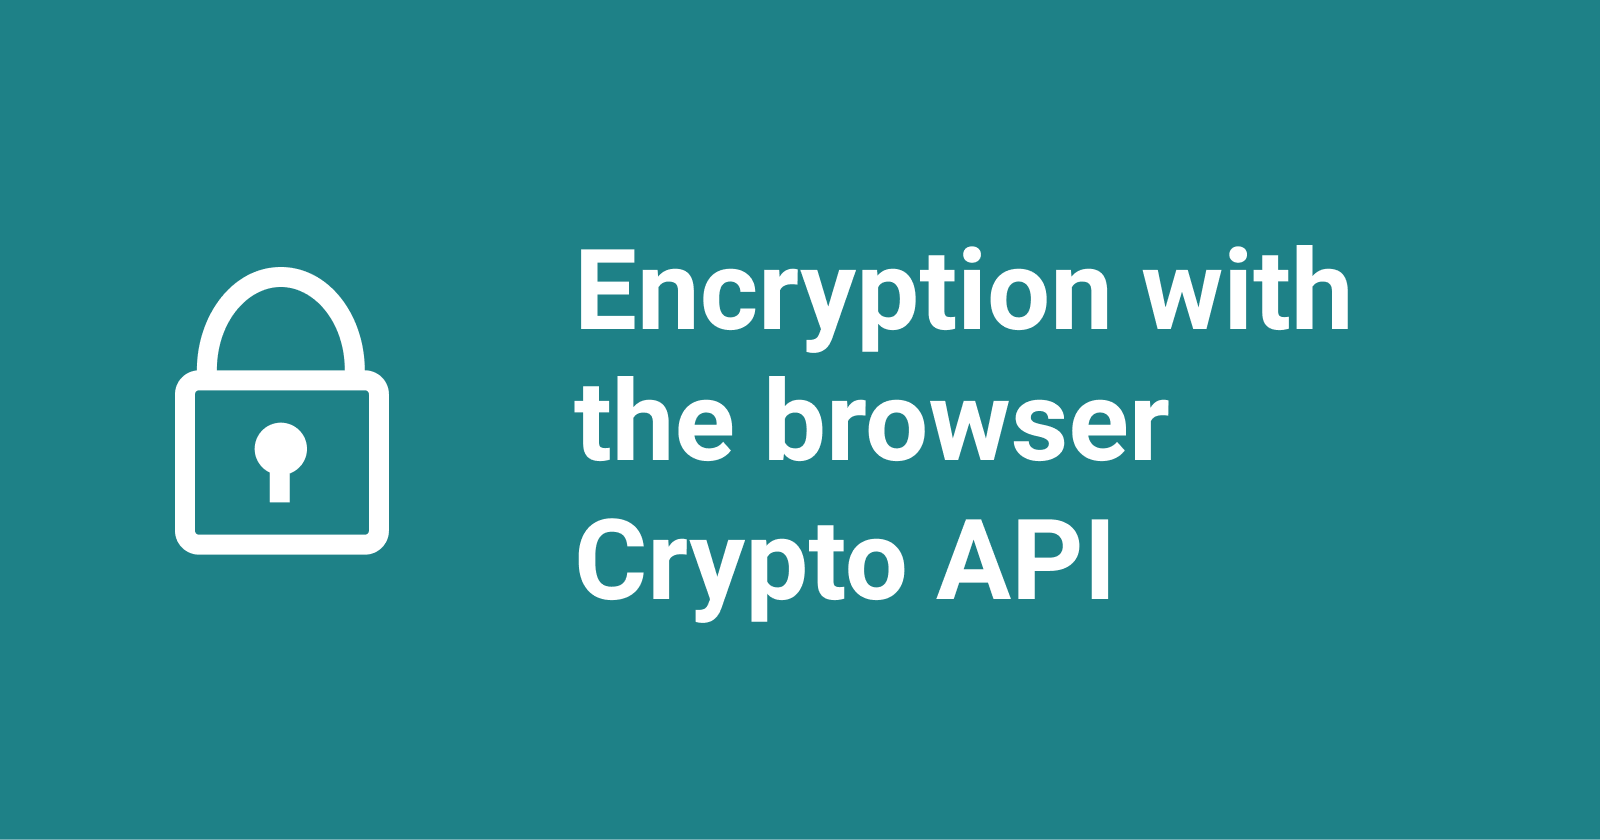 Build file encryption NextJS app with the browser crypto API